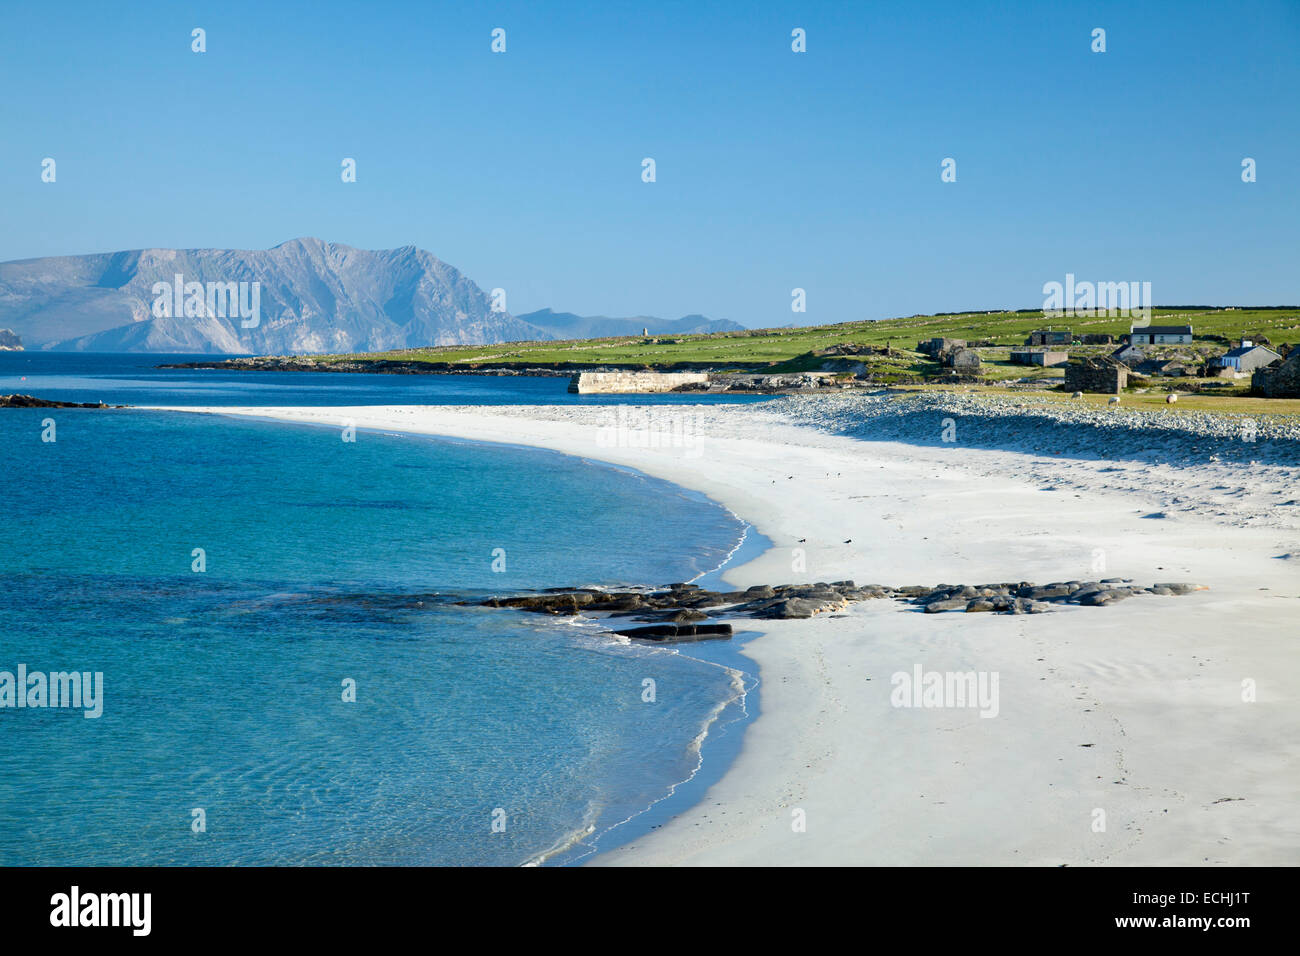 Pristine white sand beach on Inishkea South Island, County Mayo, Ireland. Stock Photo